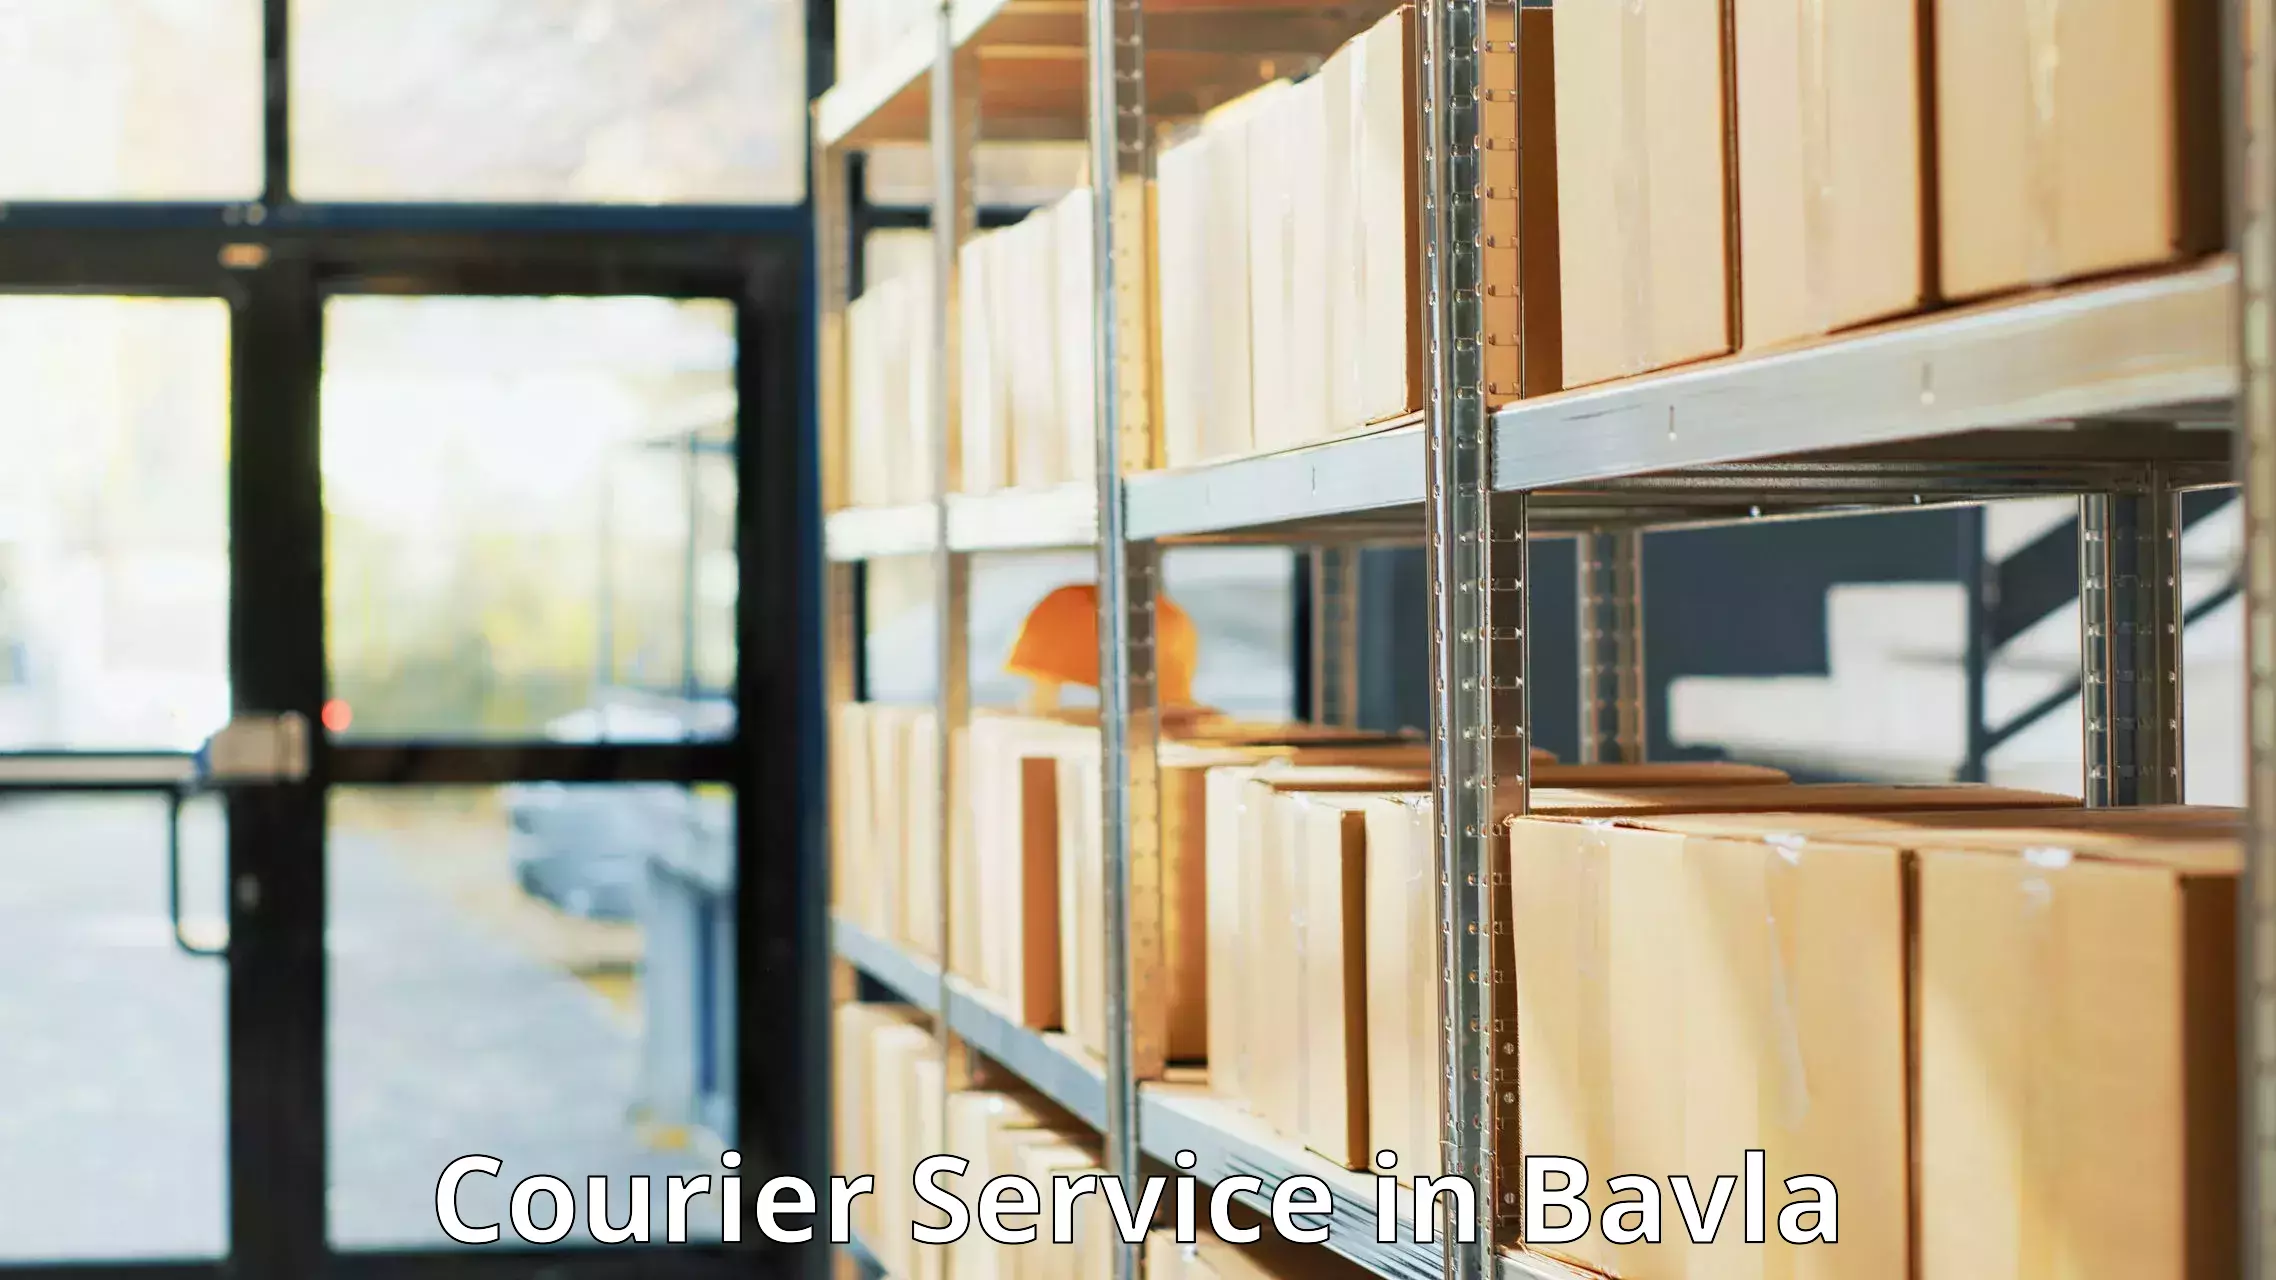 Cash on delivery service in Bavla